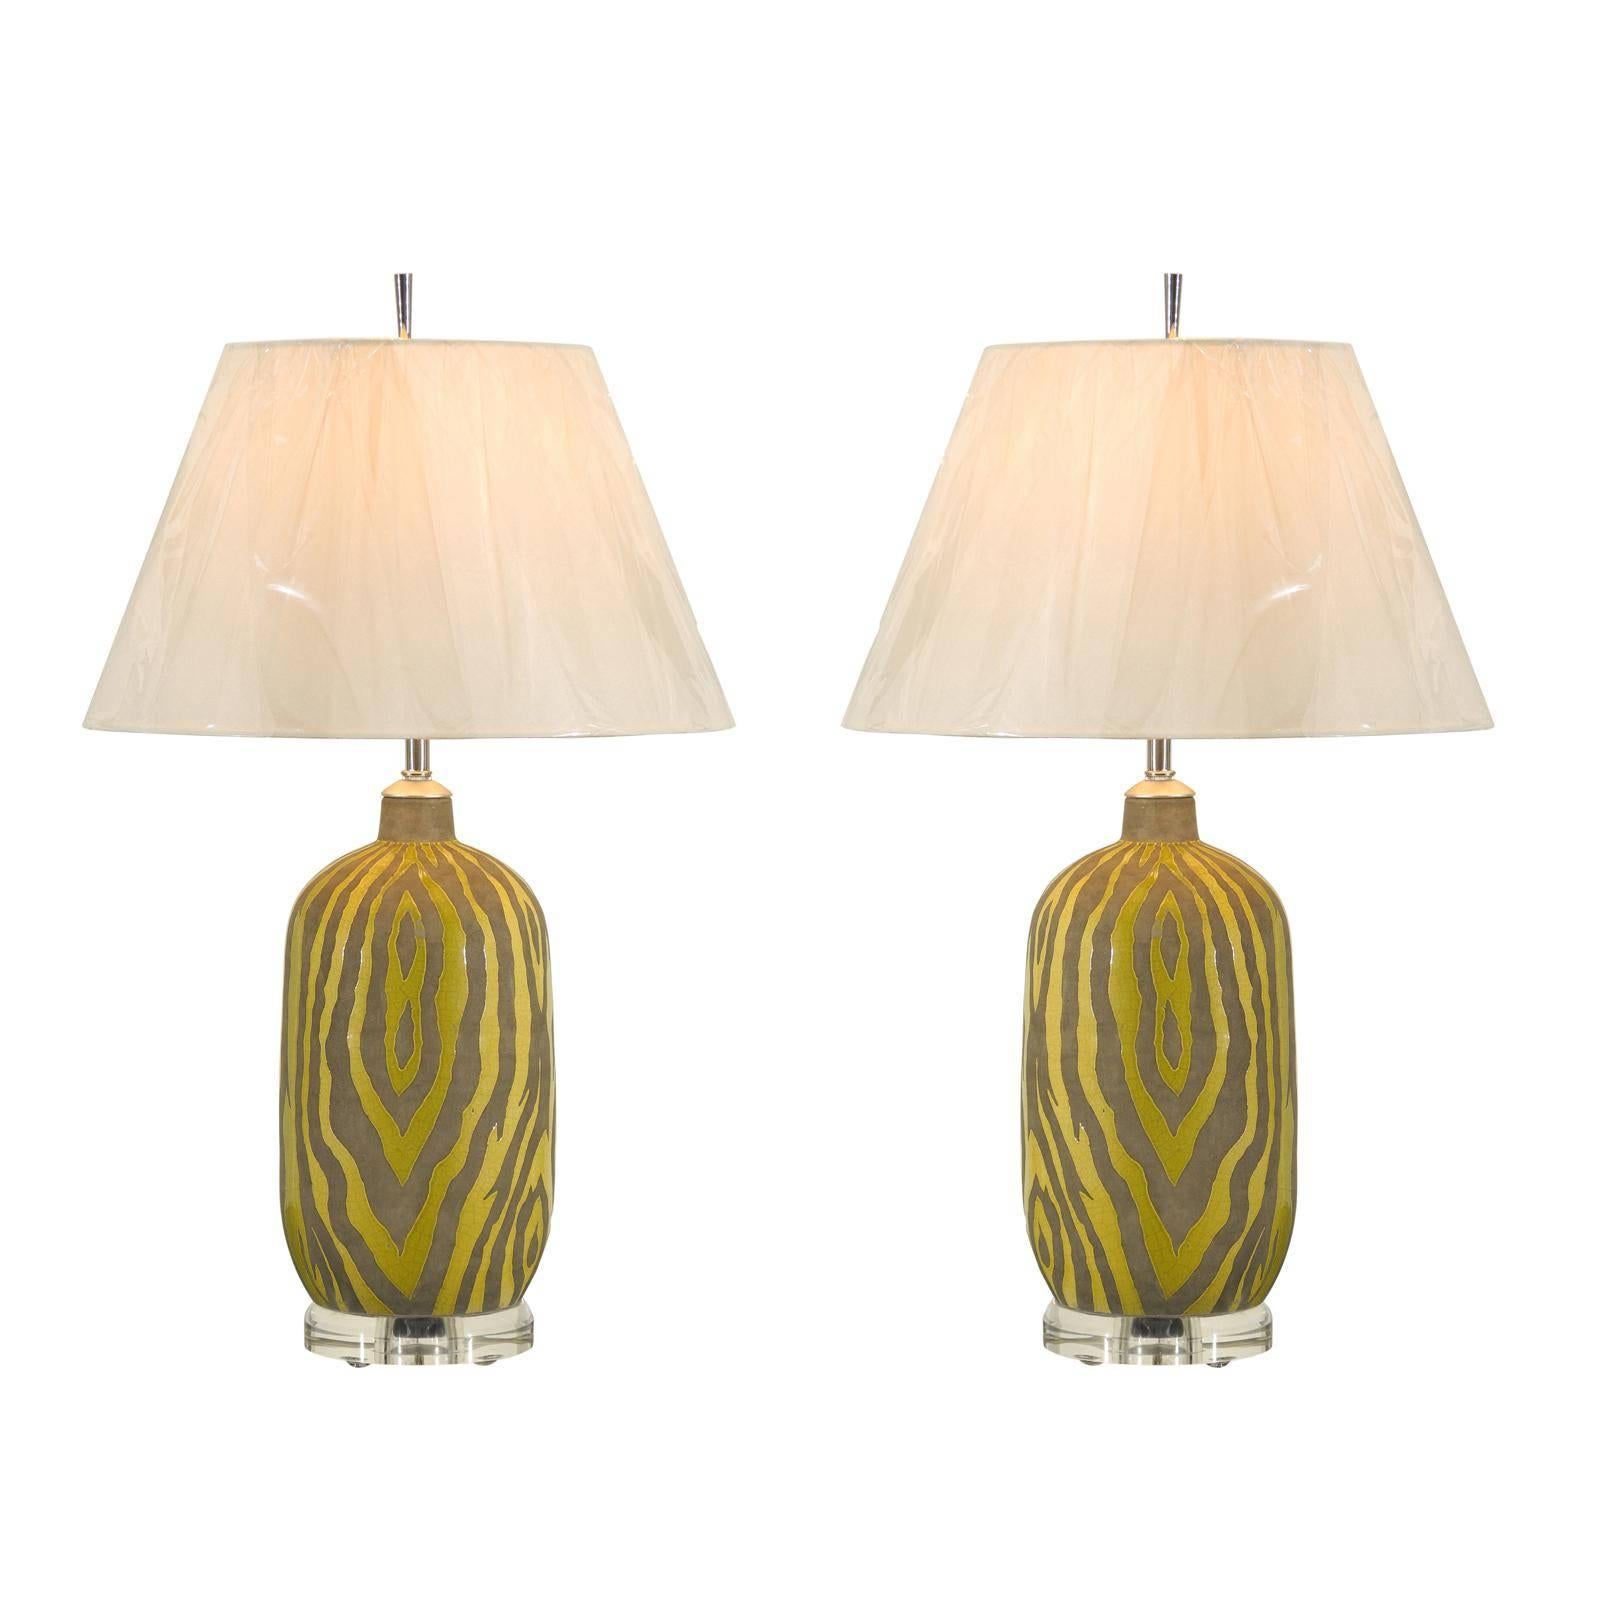 Striking Restored Pair of Vintage Zebra Print Ceramic Lamps in Citrus